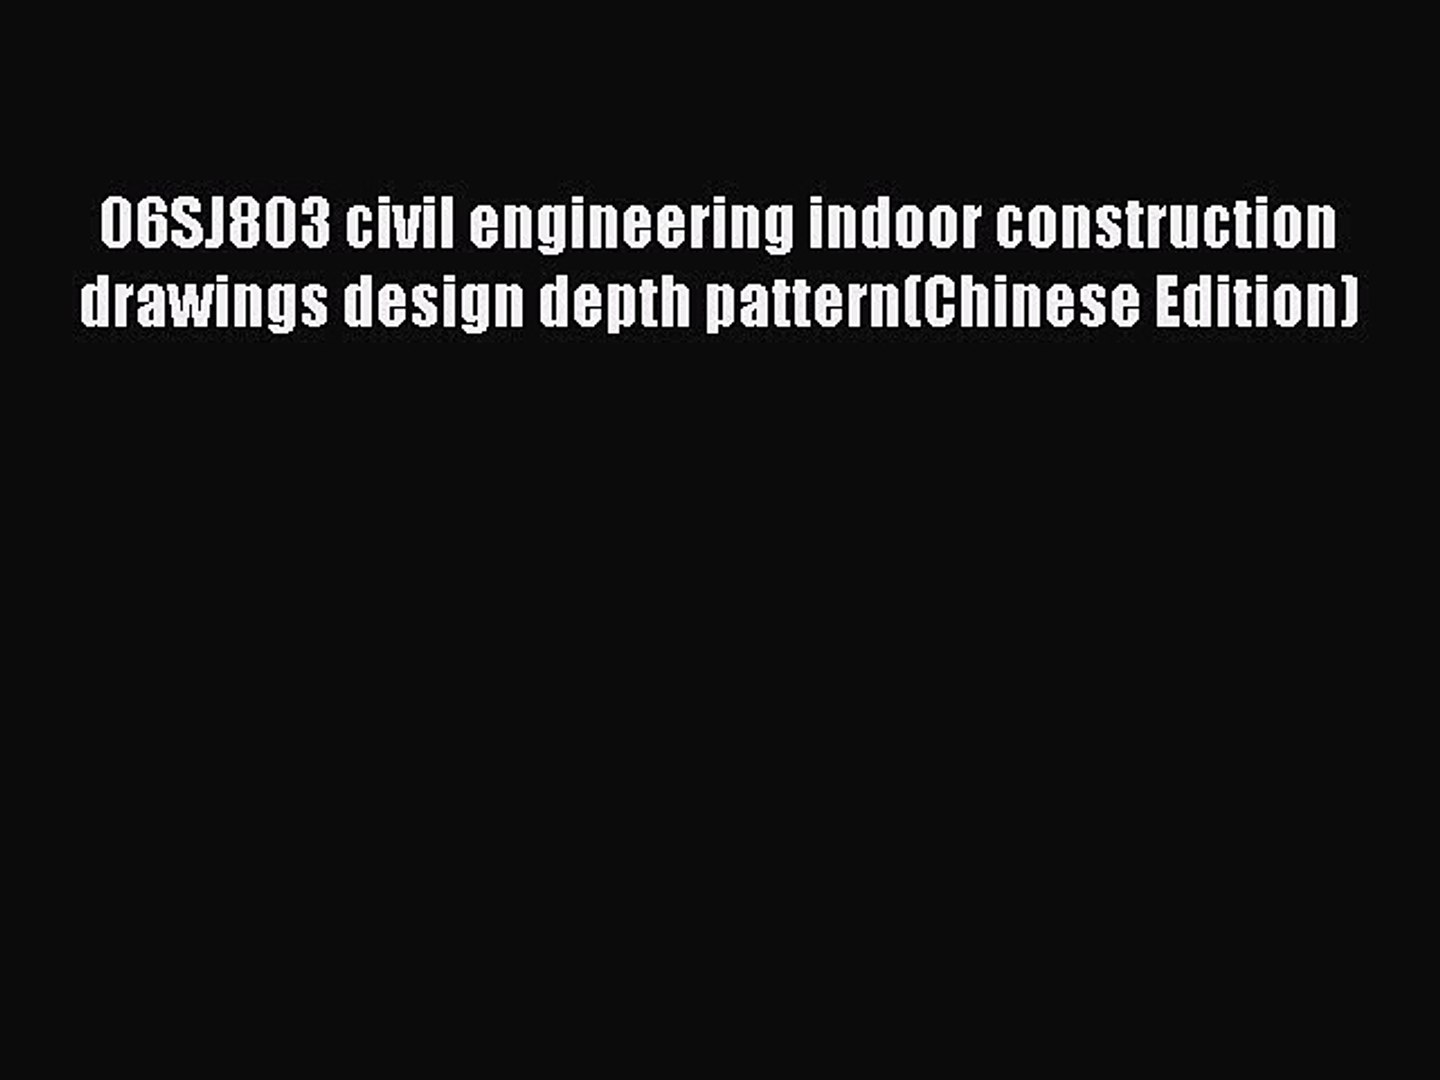 Download 06SJ803 civil engineering indoor construction drawings design depth pattern(Chinese